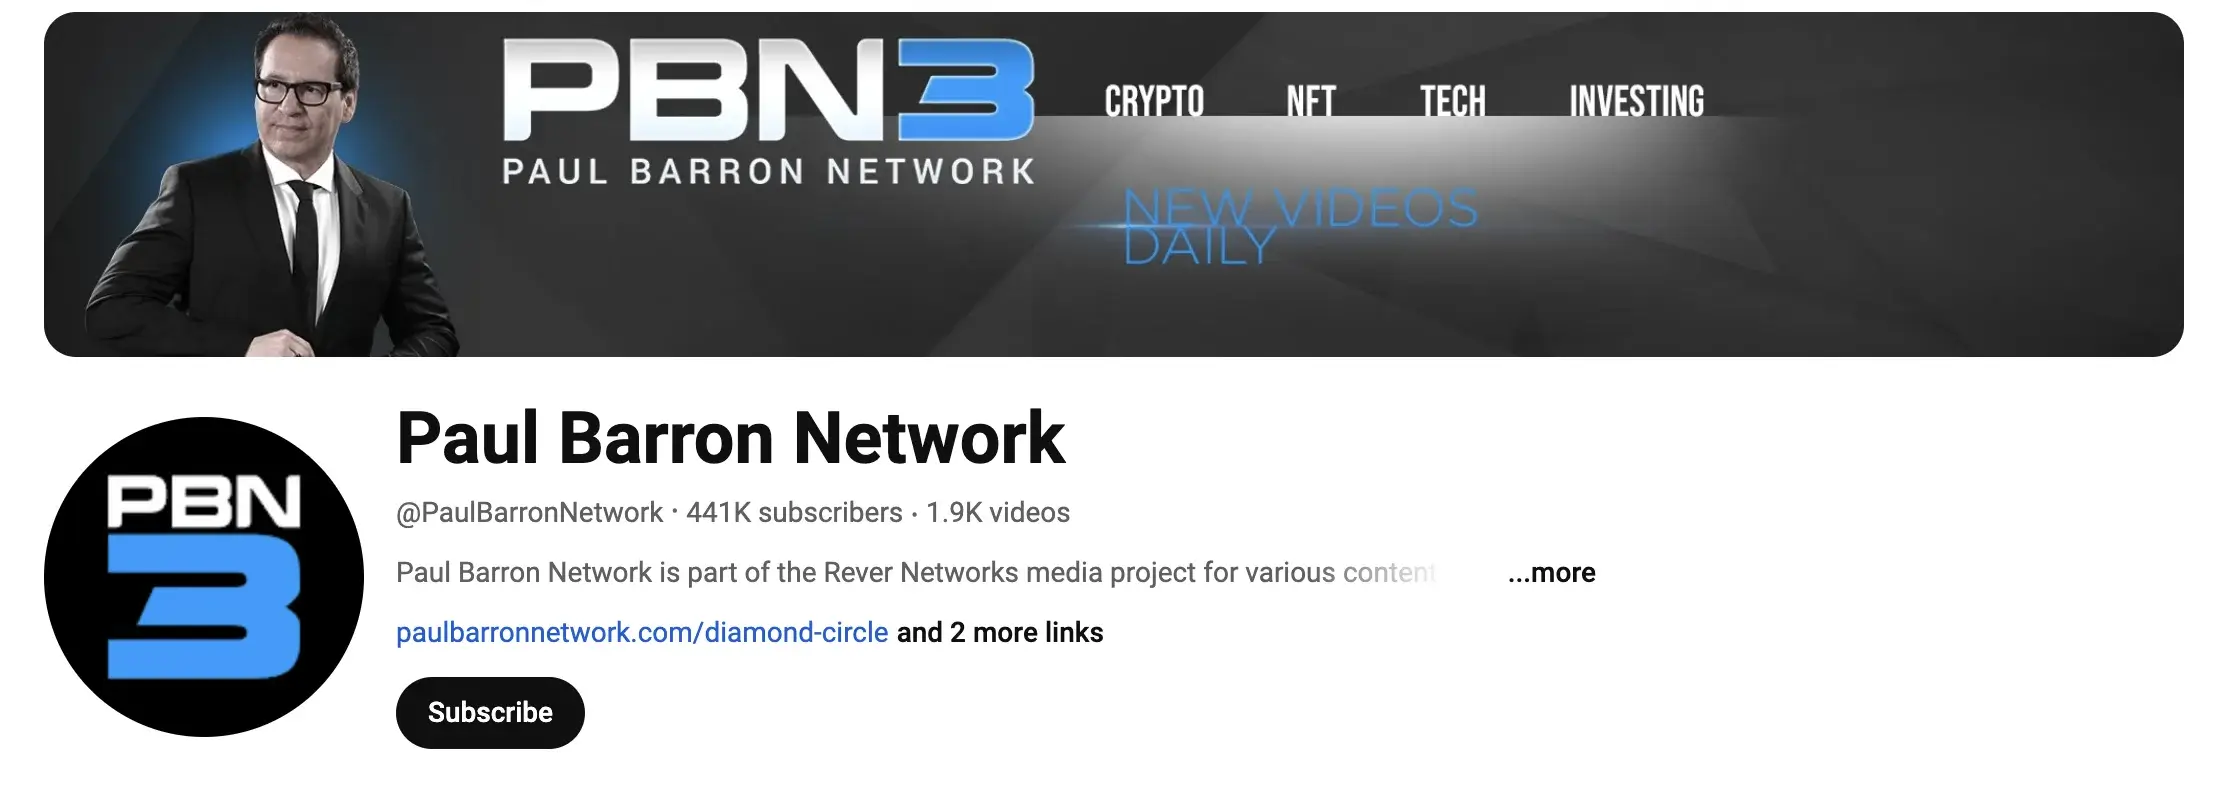 7. Paul Barron Network